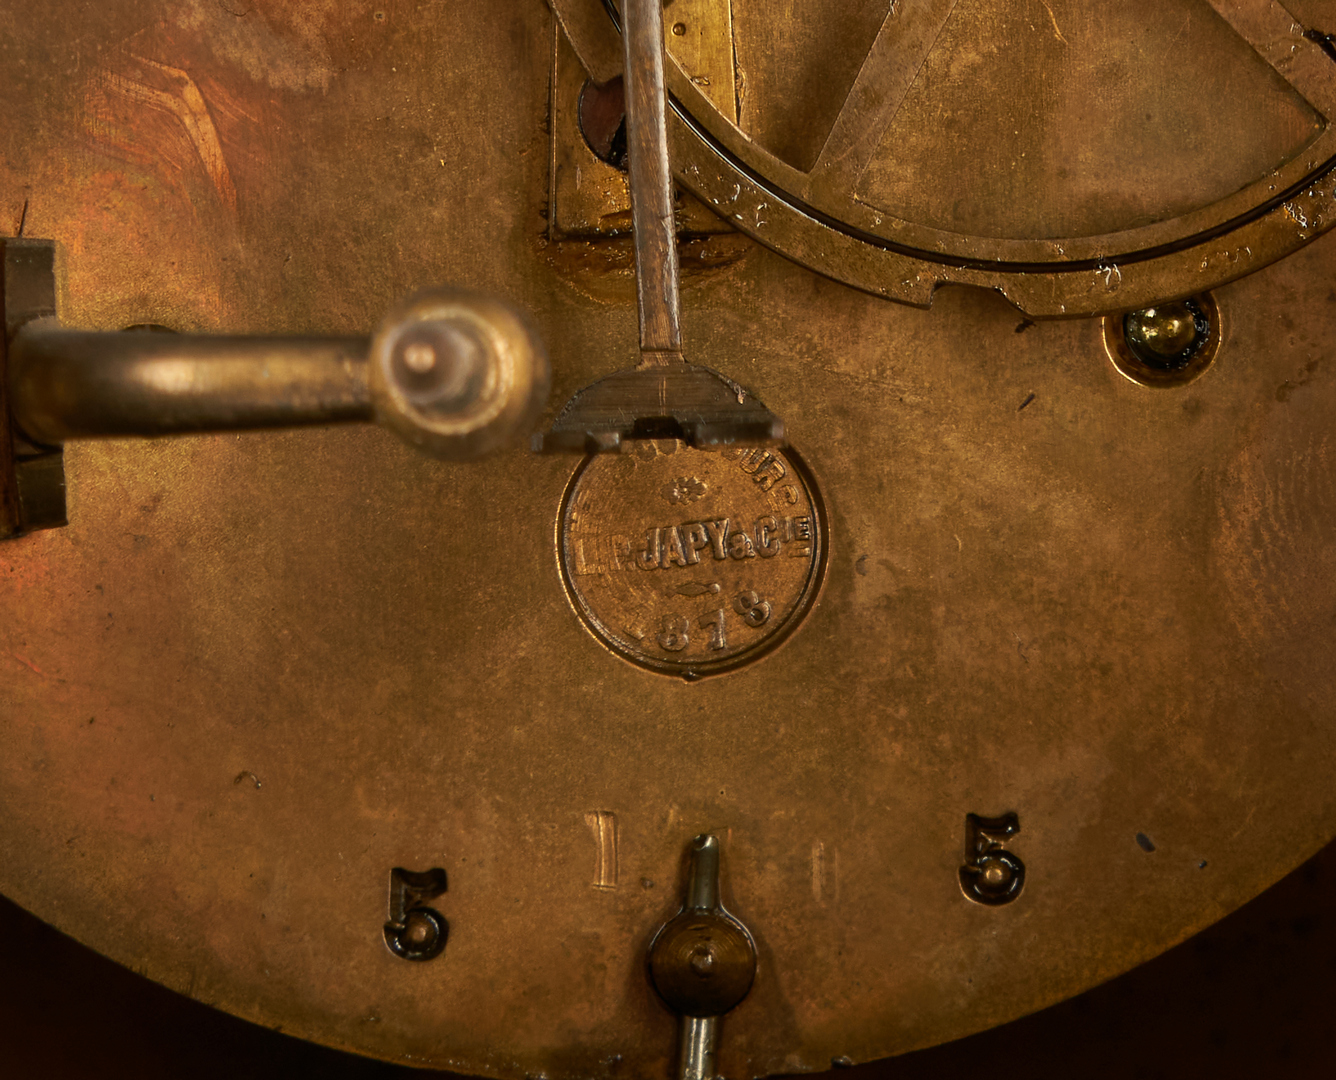 Lot 449: European Louis XV Style Gilt Bronze Mantle Clock